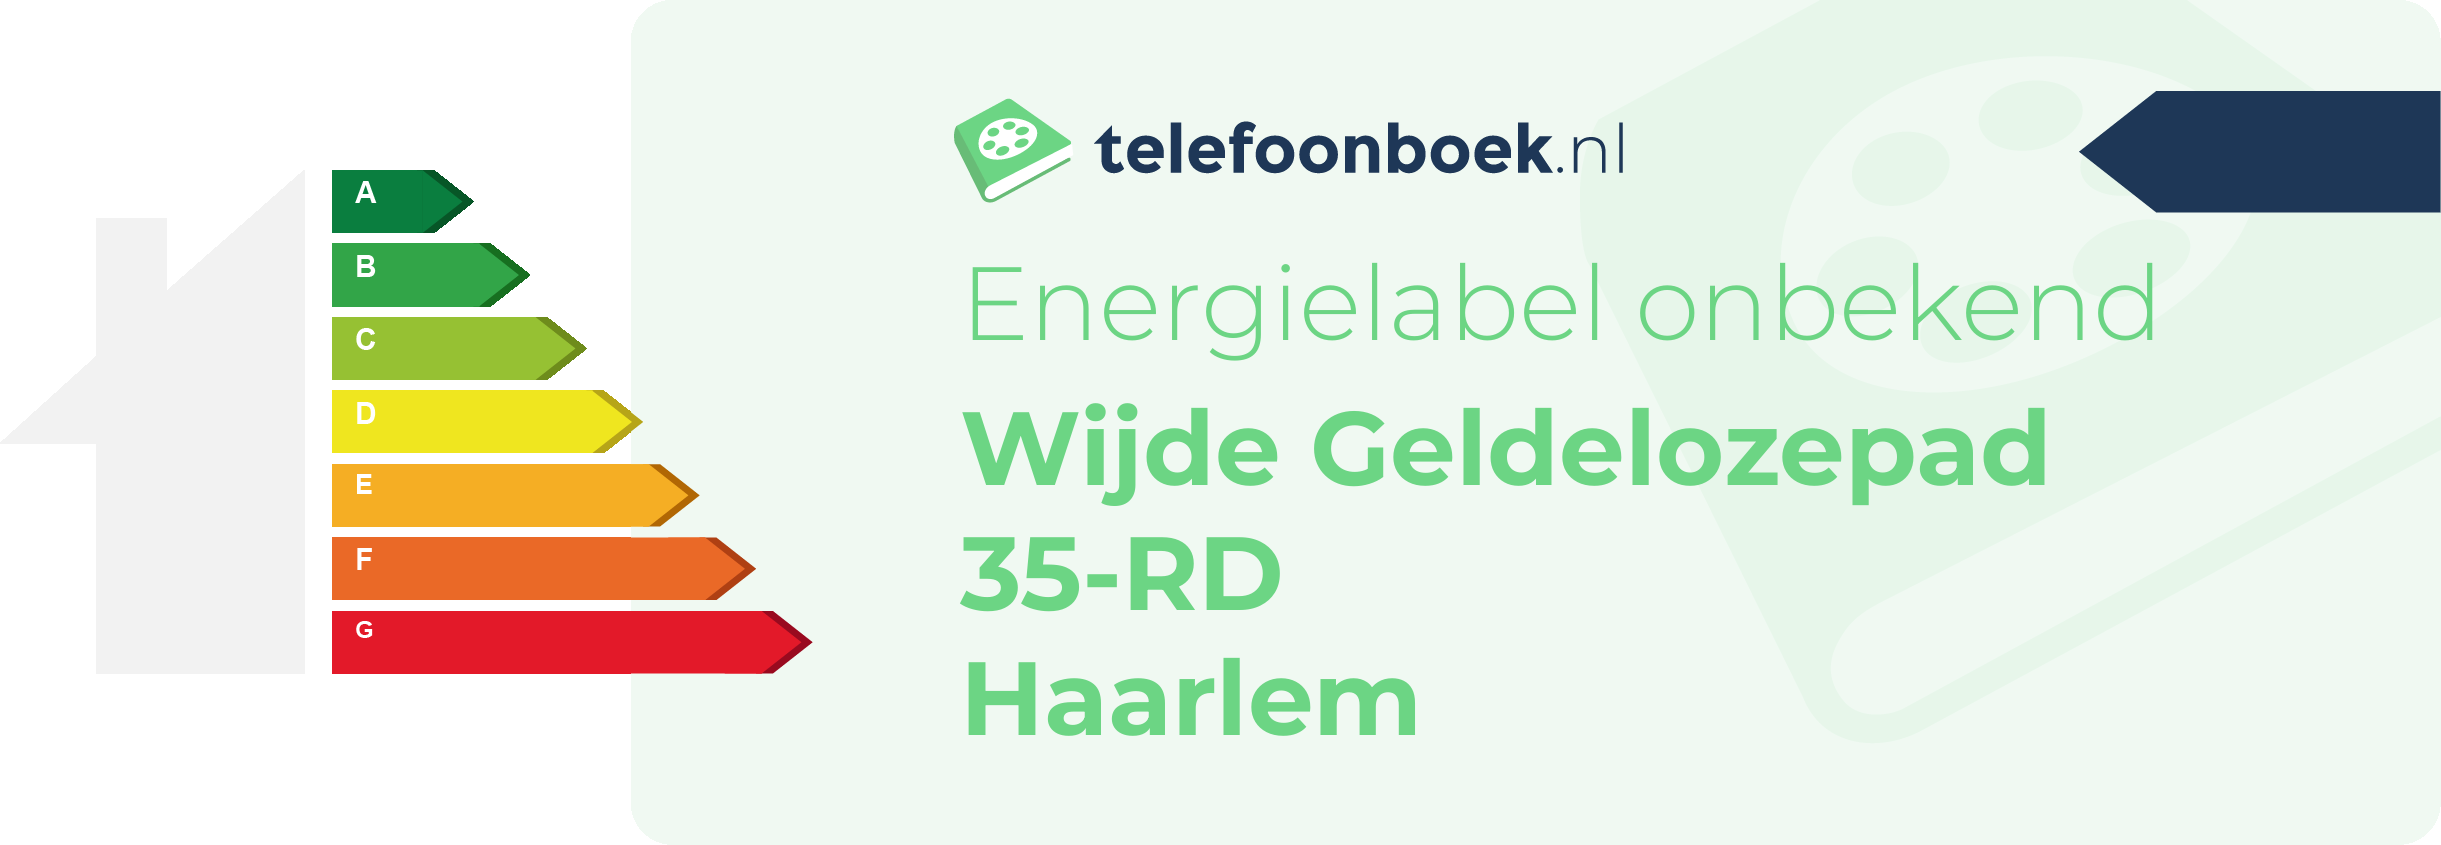 Energielabel Wijde Geldelozepad 35-RD Haarlem